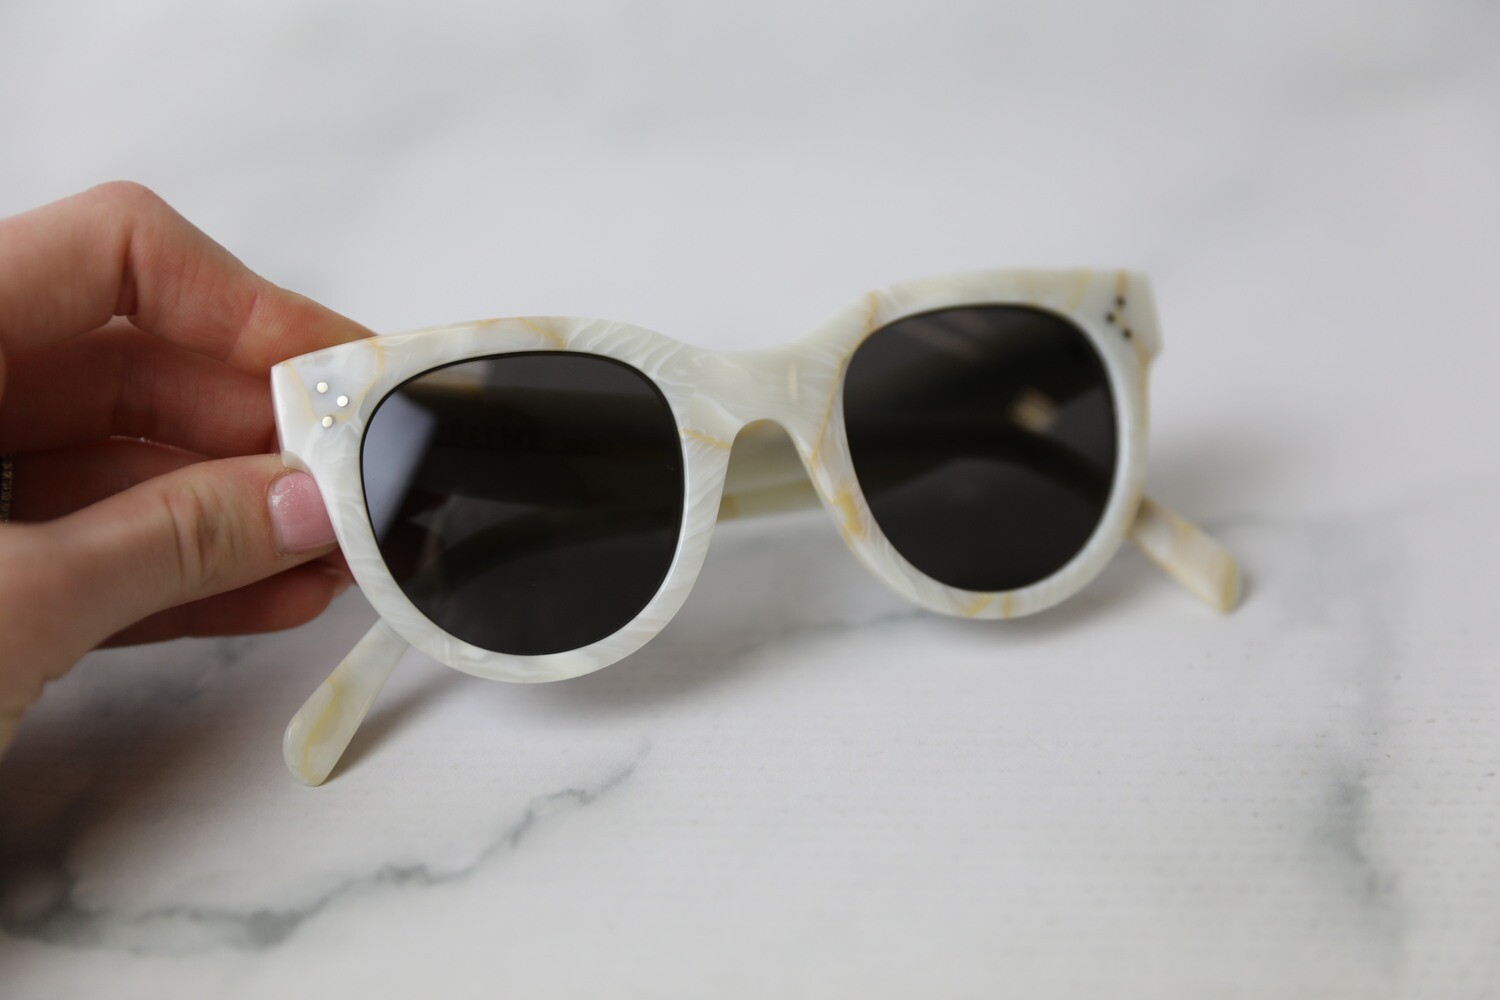 Off-White Boston (Marble) Sunglasses - Marble